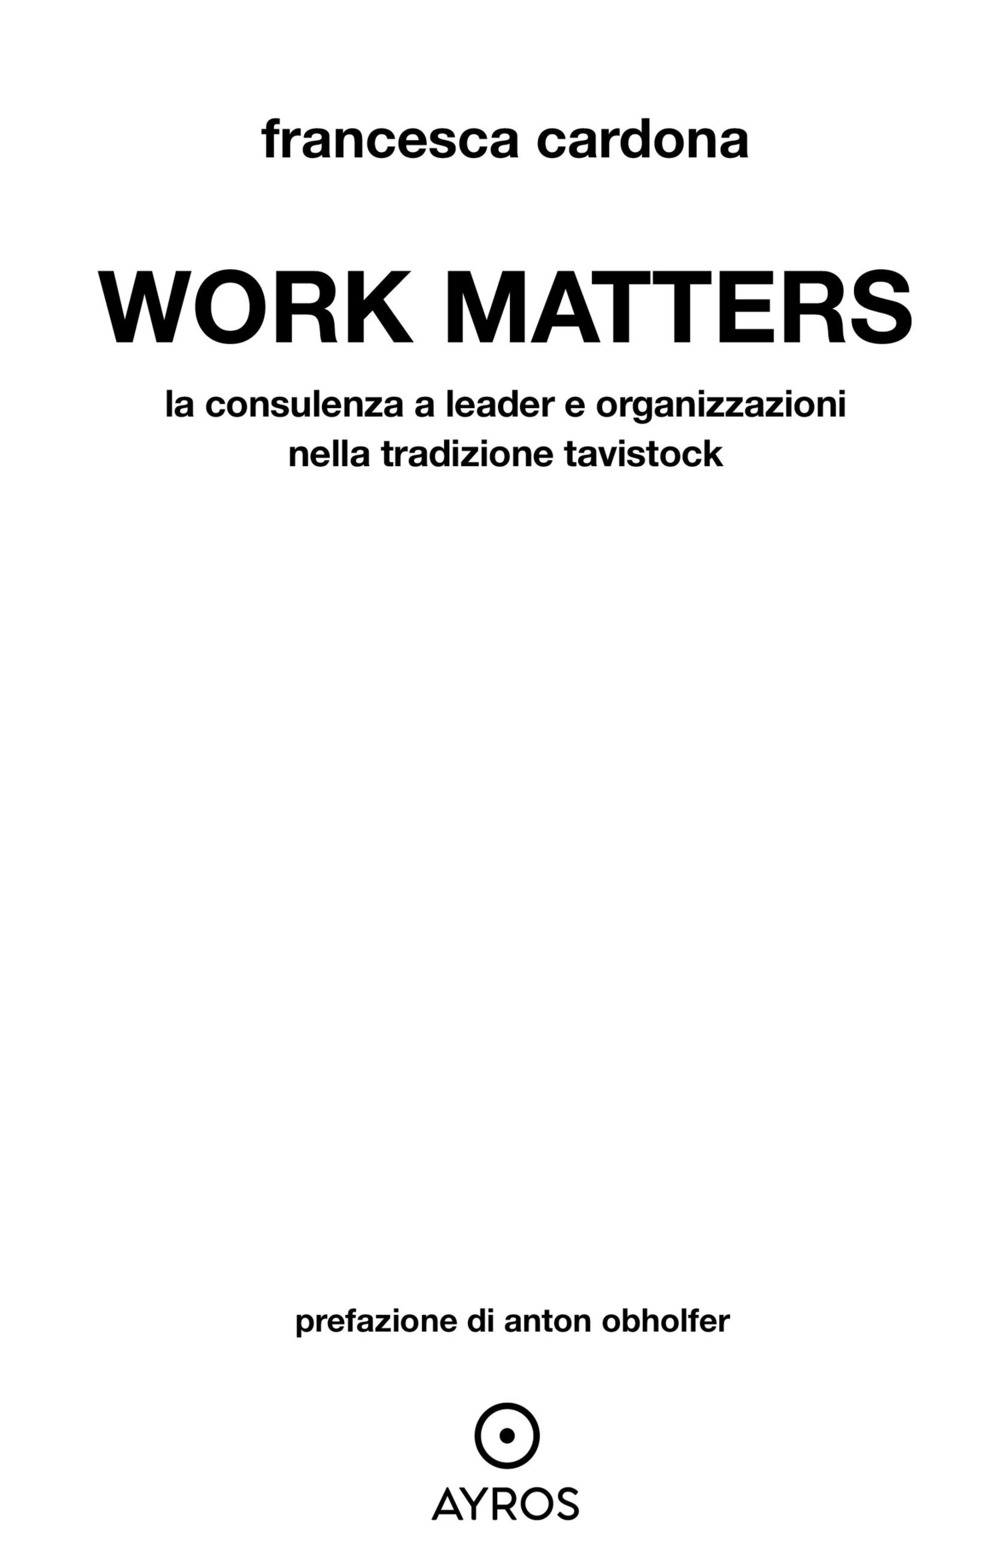 Work matters